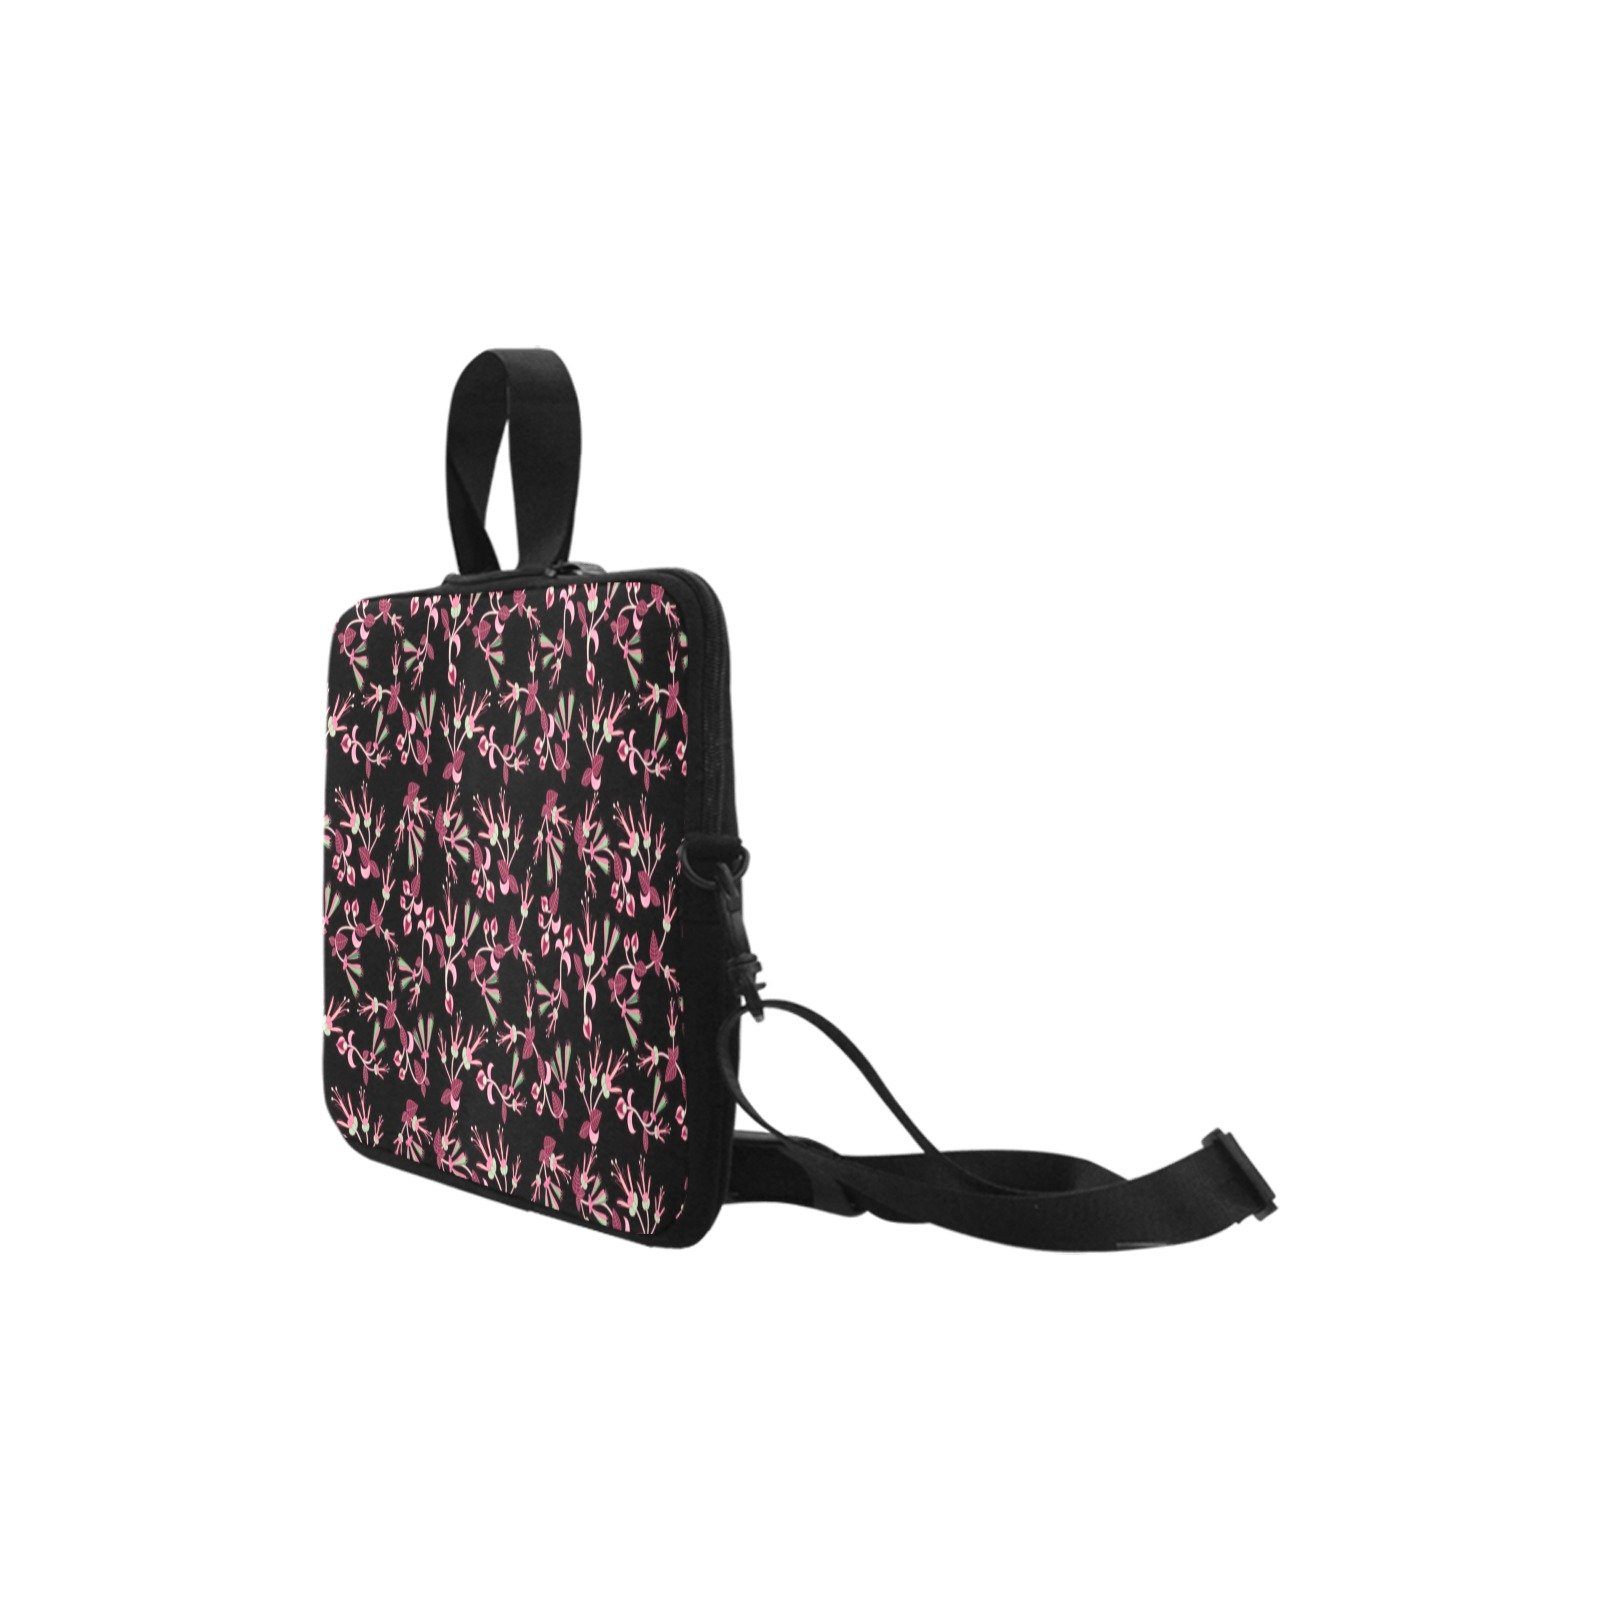 Floral Green Black Laptop Handbags 15" Laptop Handbags 15" e-joyer 